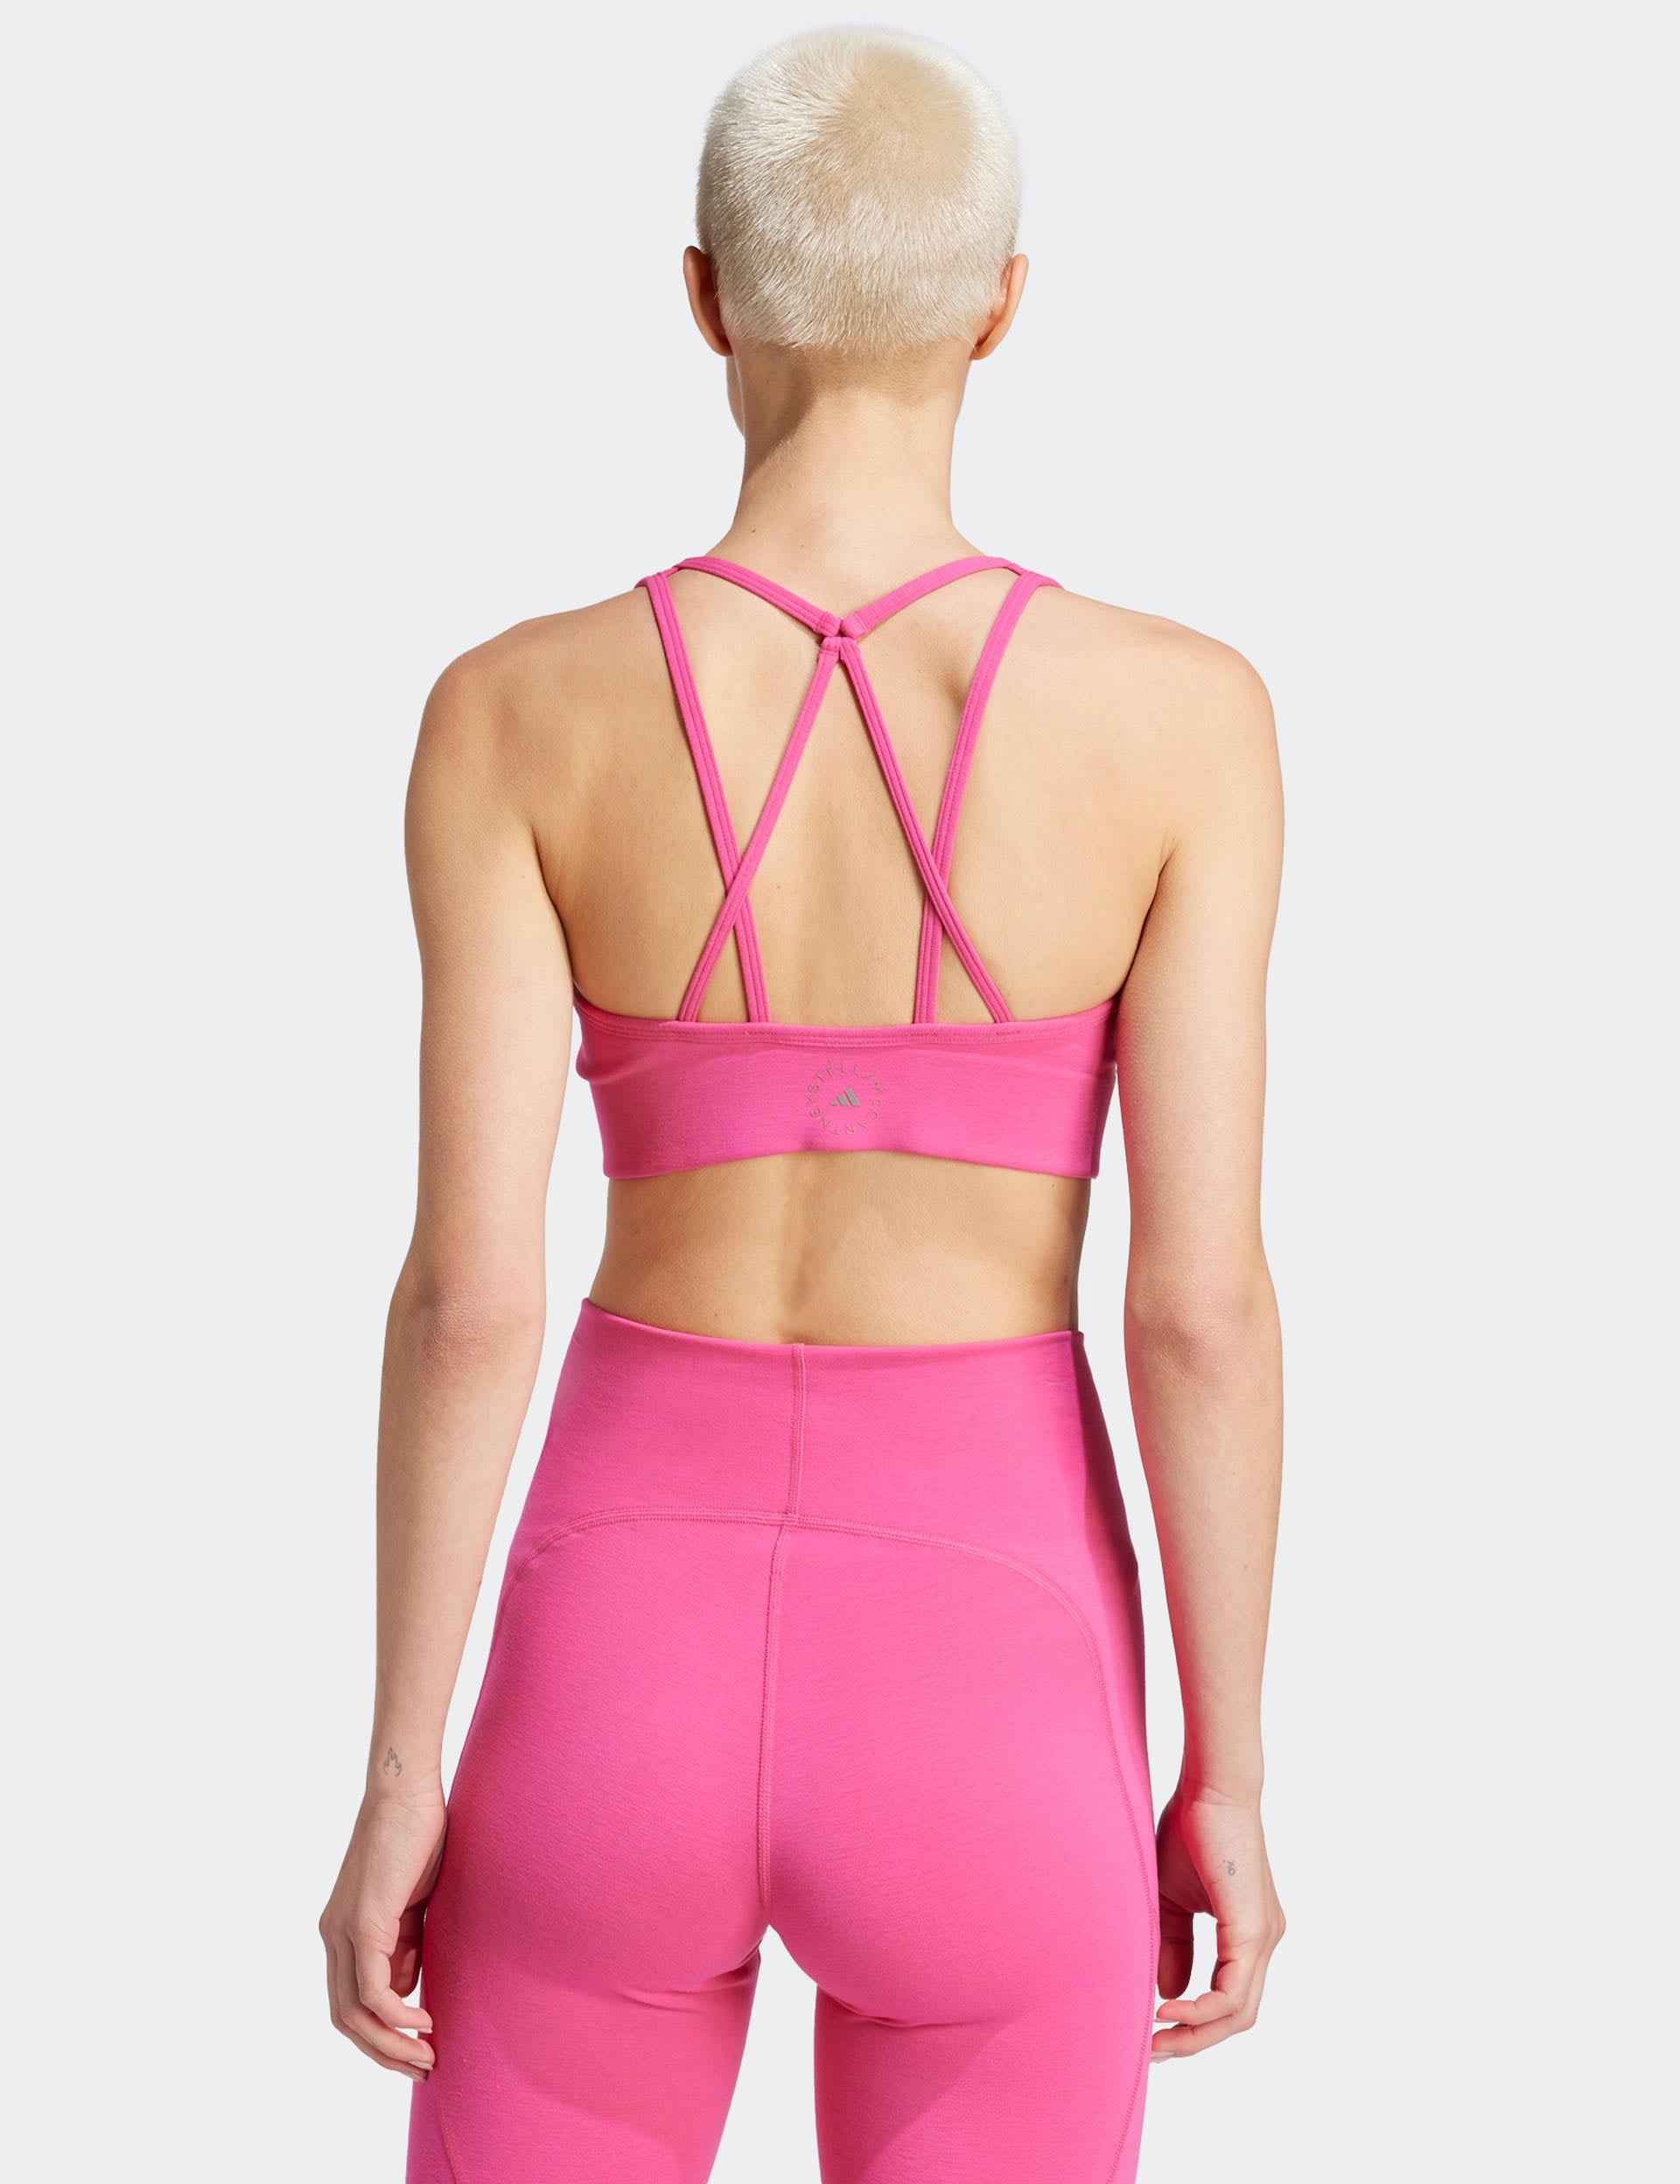 adidas by Stella McCartney True Strength Medium Support Bra in Semi Pink  Glow, Pink. Size L (also in M, S, XS).